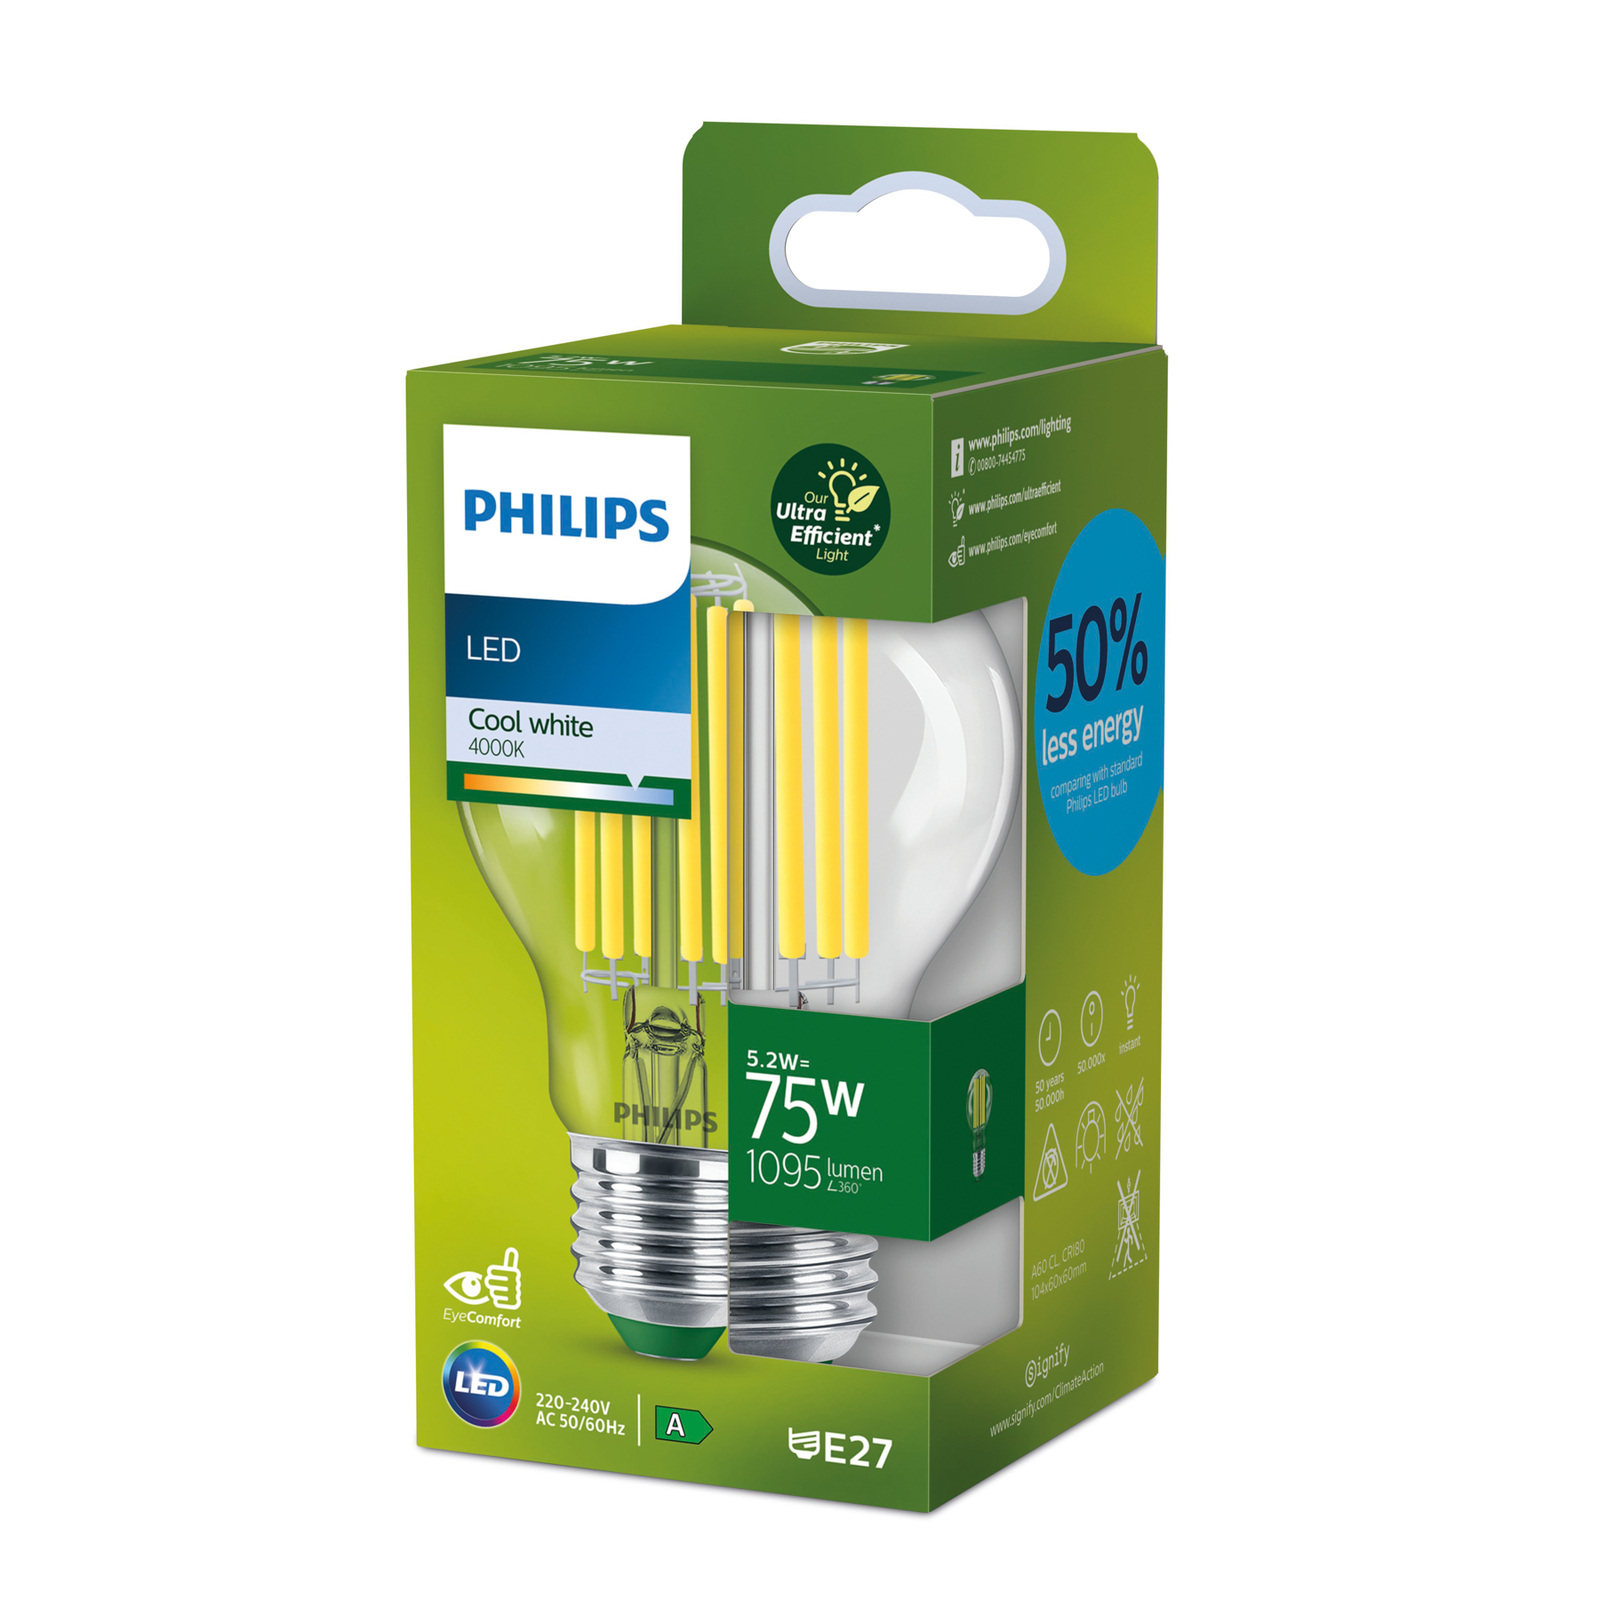 Philips E27 LED A60 5,2W 1095lm 4.000K claro